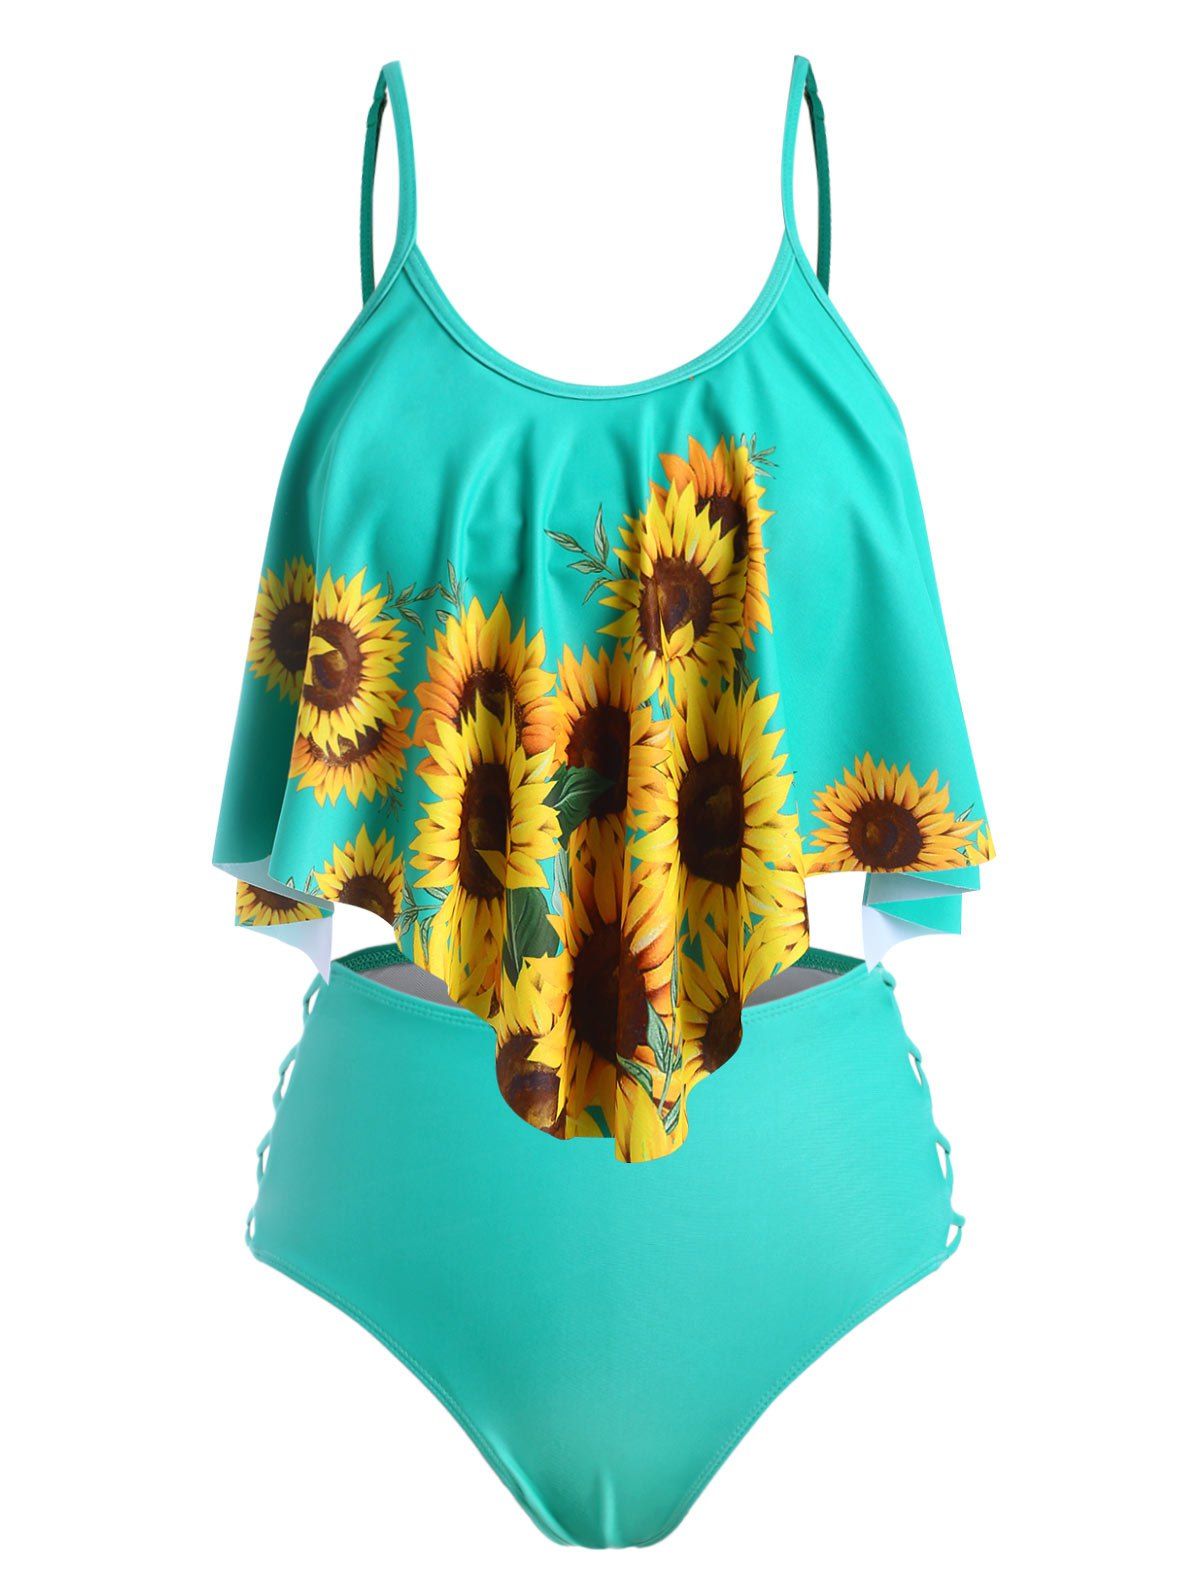 Sunflower Crisscross Swimsuit Flounce High Waisted Tankini Swimwear Set - MACAW BLUE GREEN S